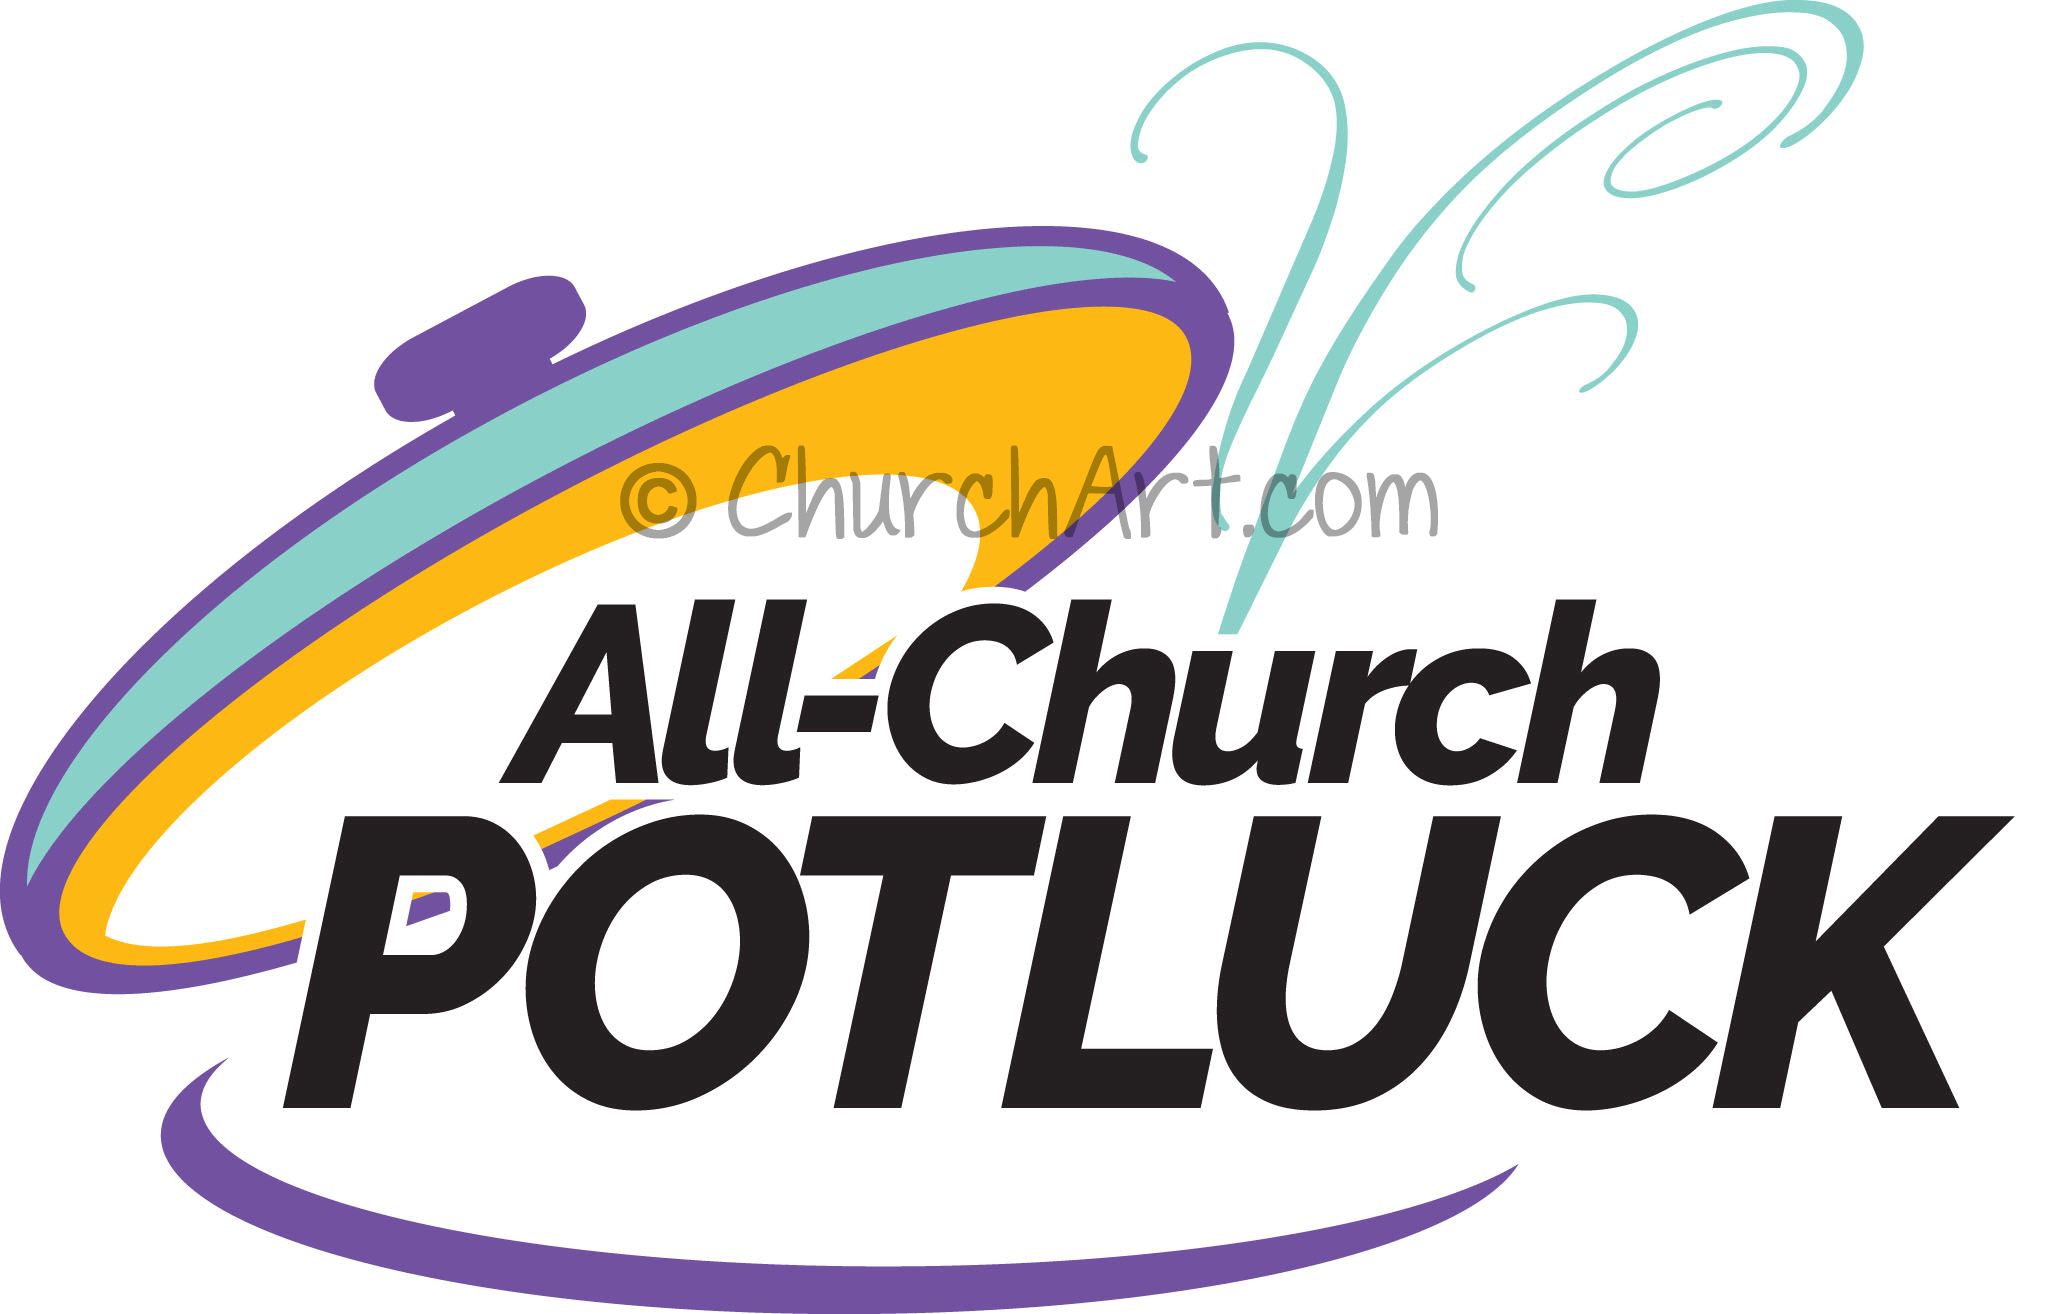 Clip-art image of pot for all-church potluck or church supper for church bulletin or church newsletter